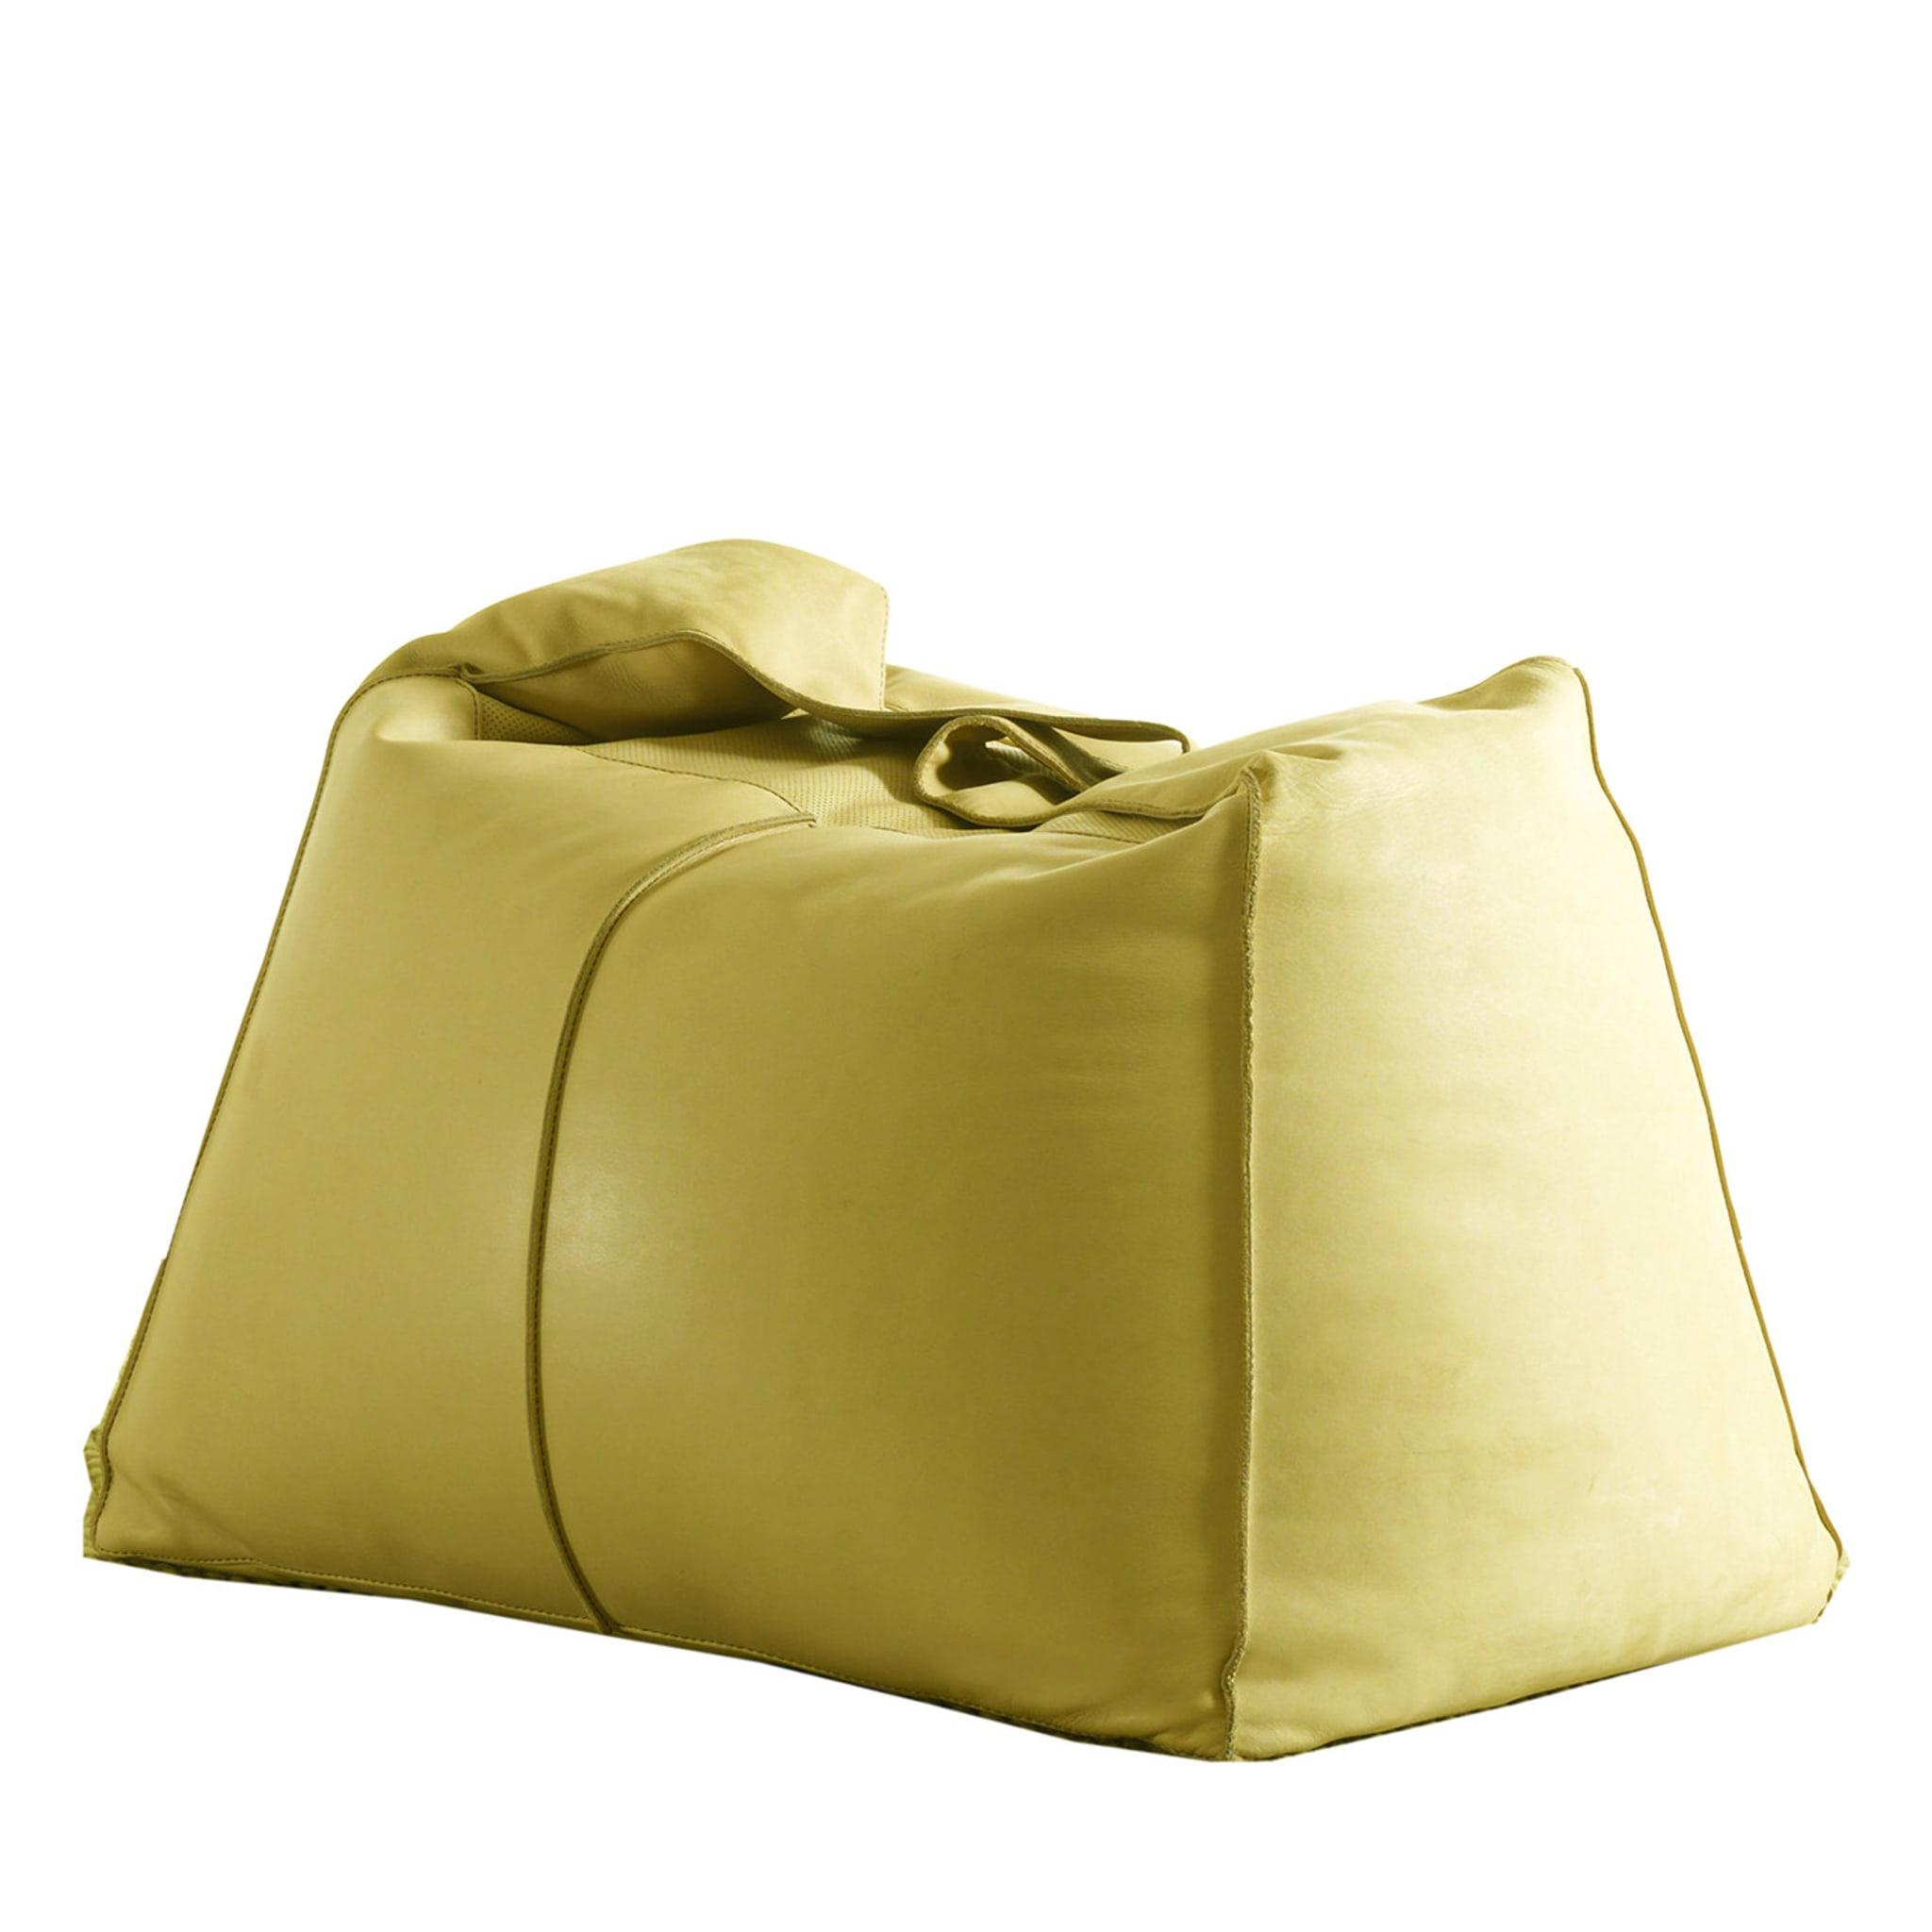 Italian Yellow Bean Bag Chairs Deluxe